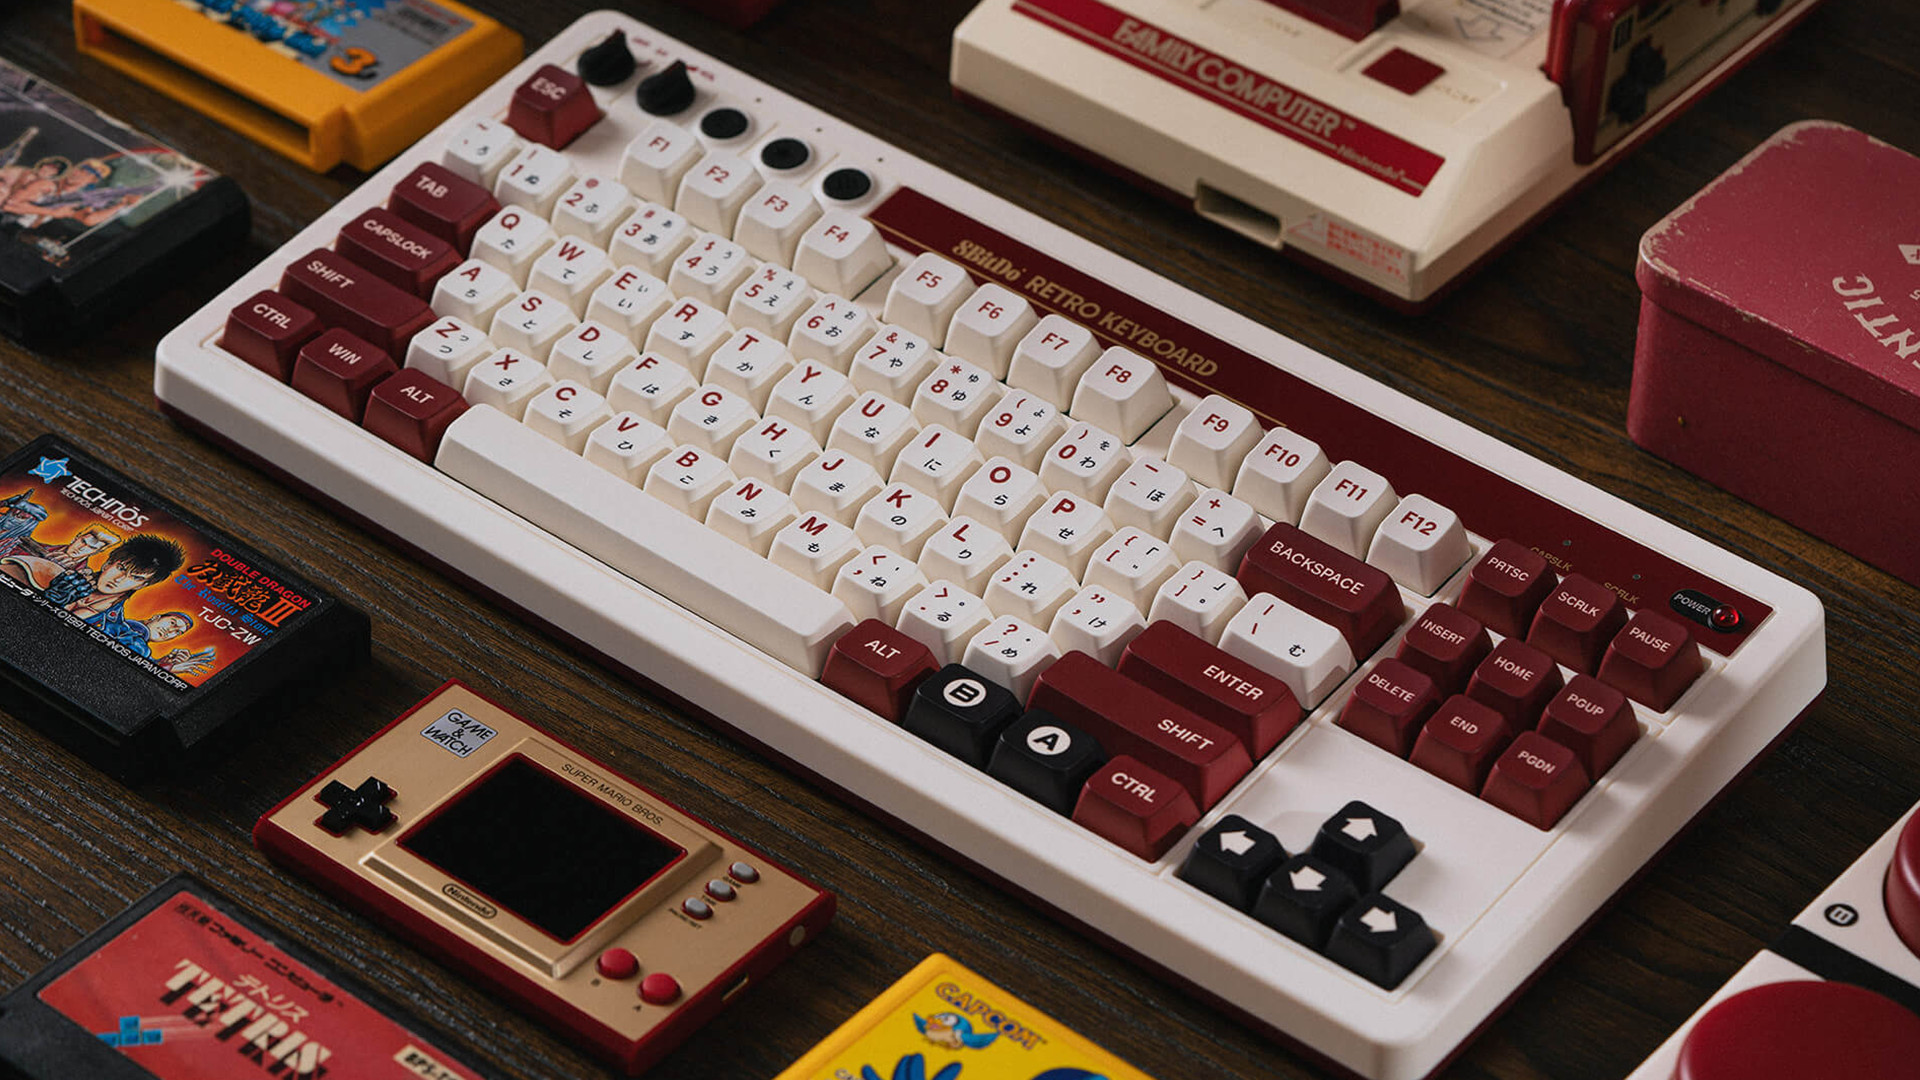 Famicom style Retro Gaming Keyboard